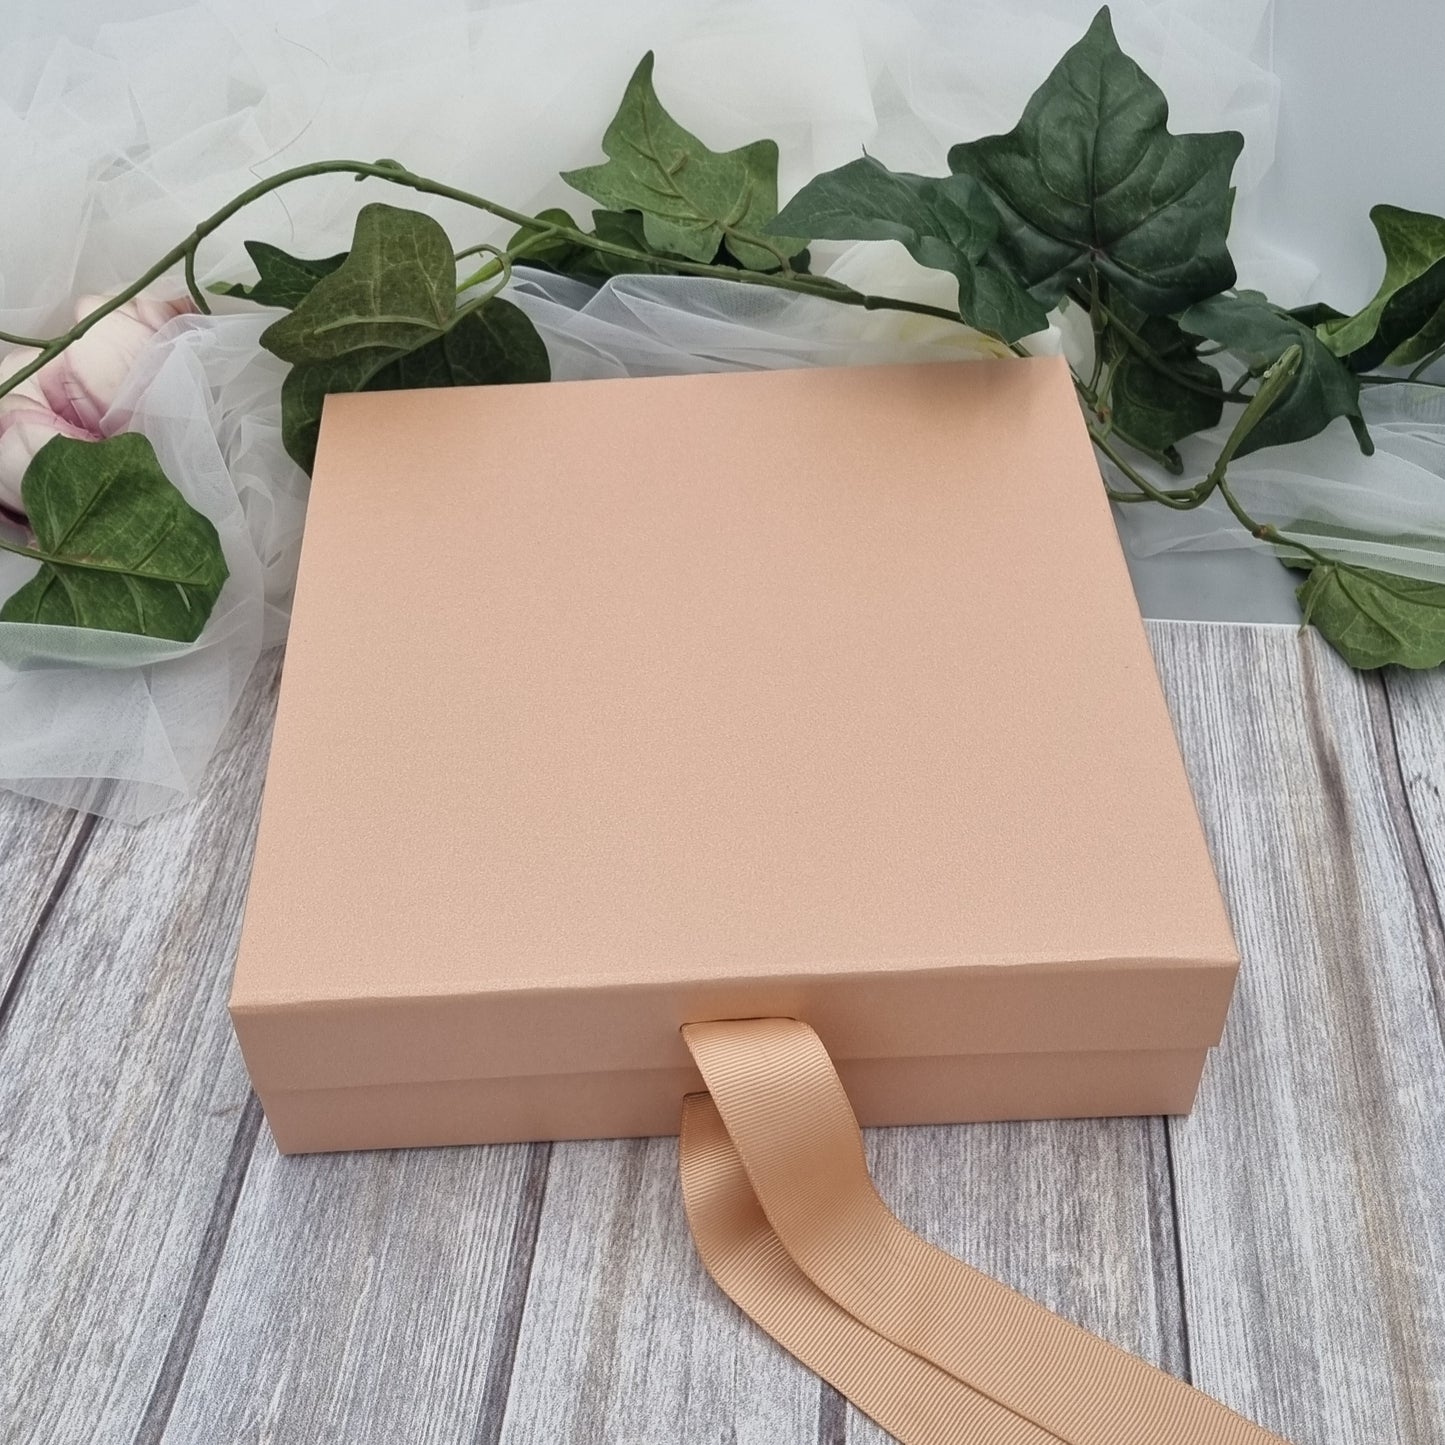 Rose gold Gift Box